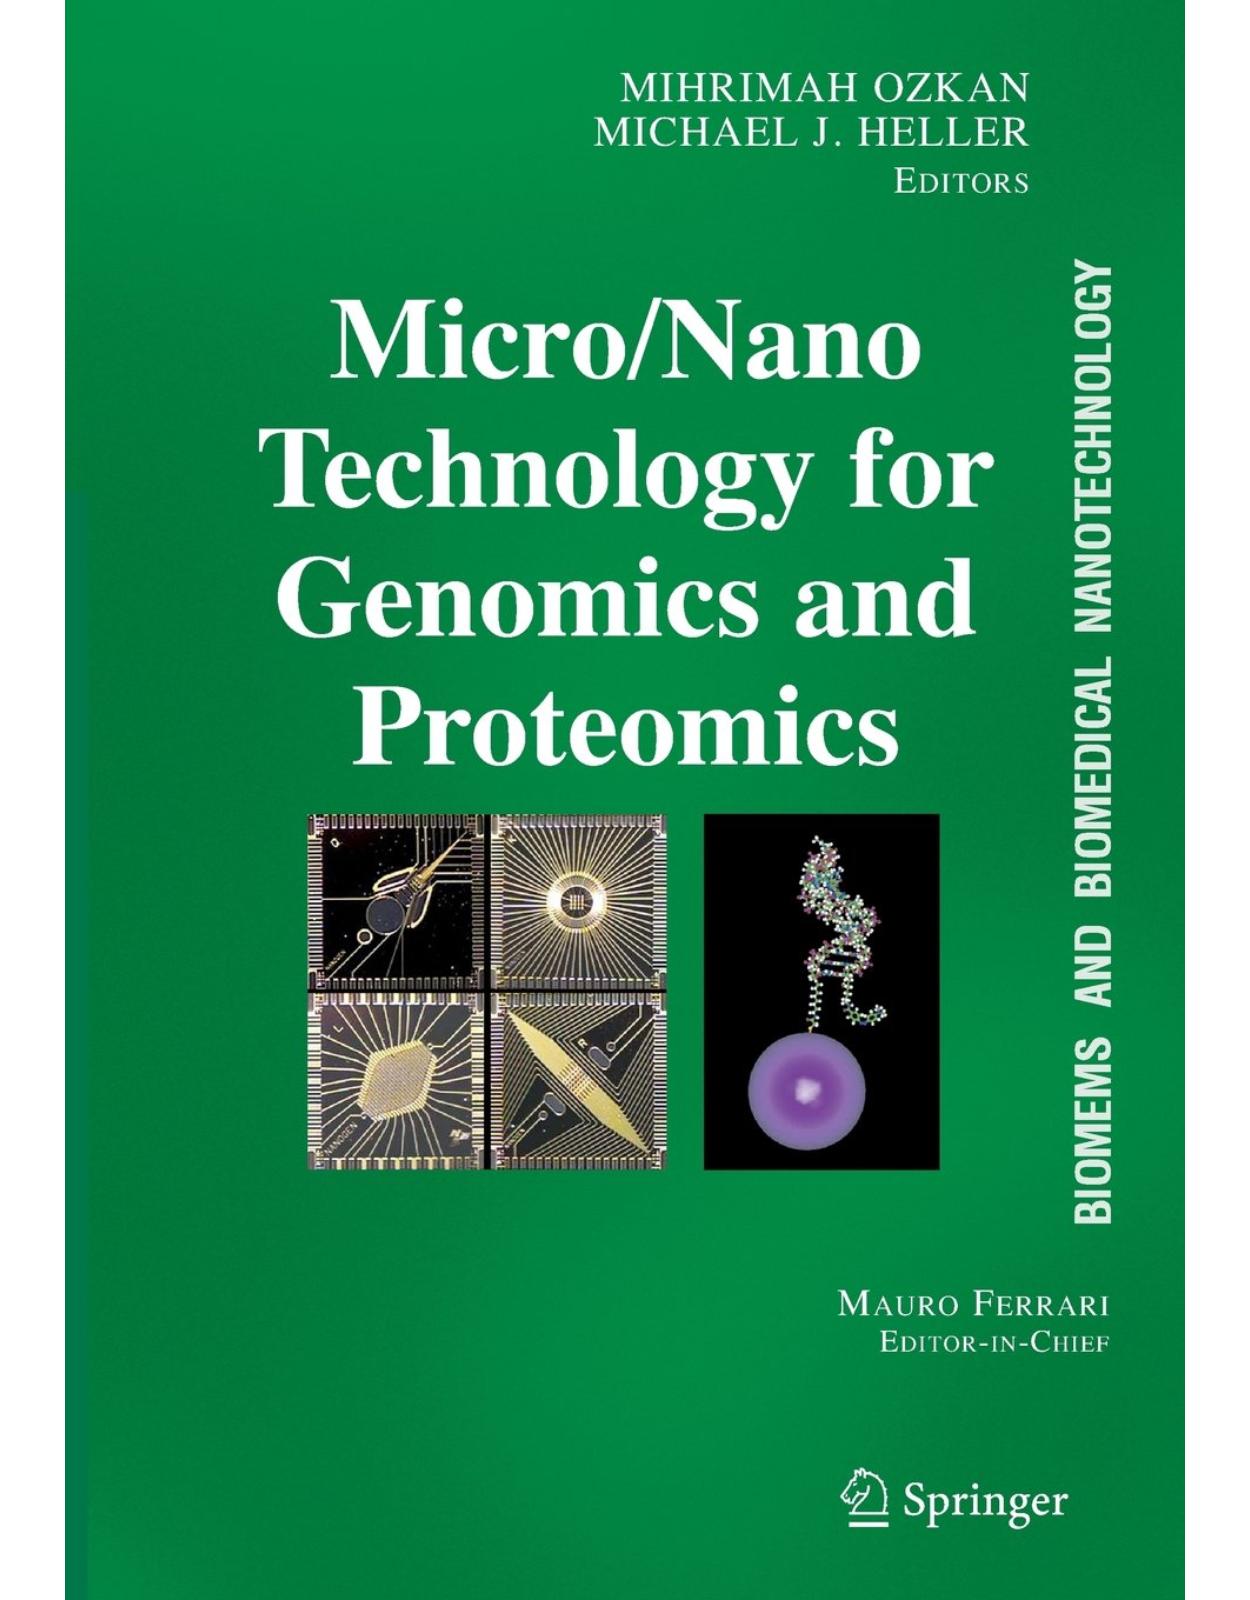 Micro/Nano Technologies for Genomics and Proteomics: Micro-and-nano-technologies for Genomics and Proteomics v. 2 (Biomems and Biomedical Nanotechnology)